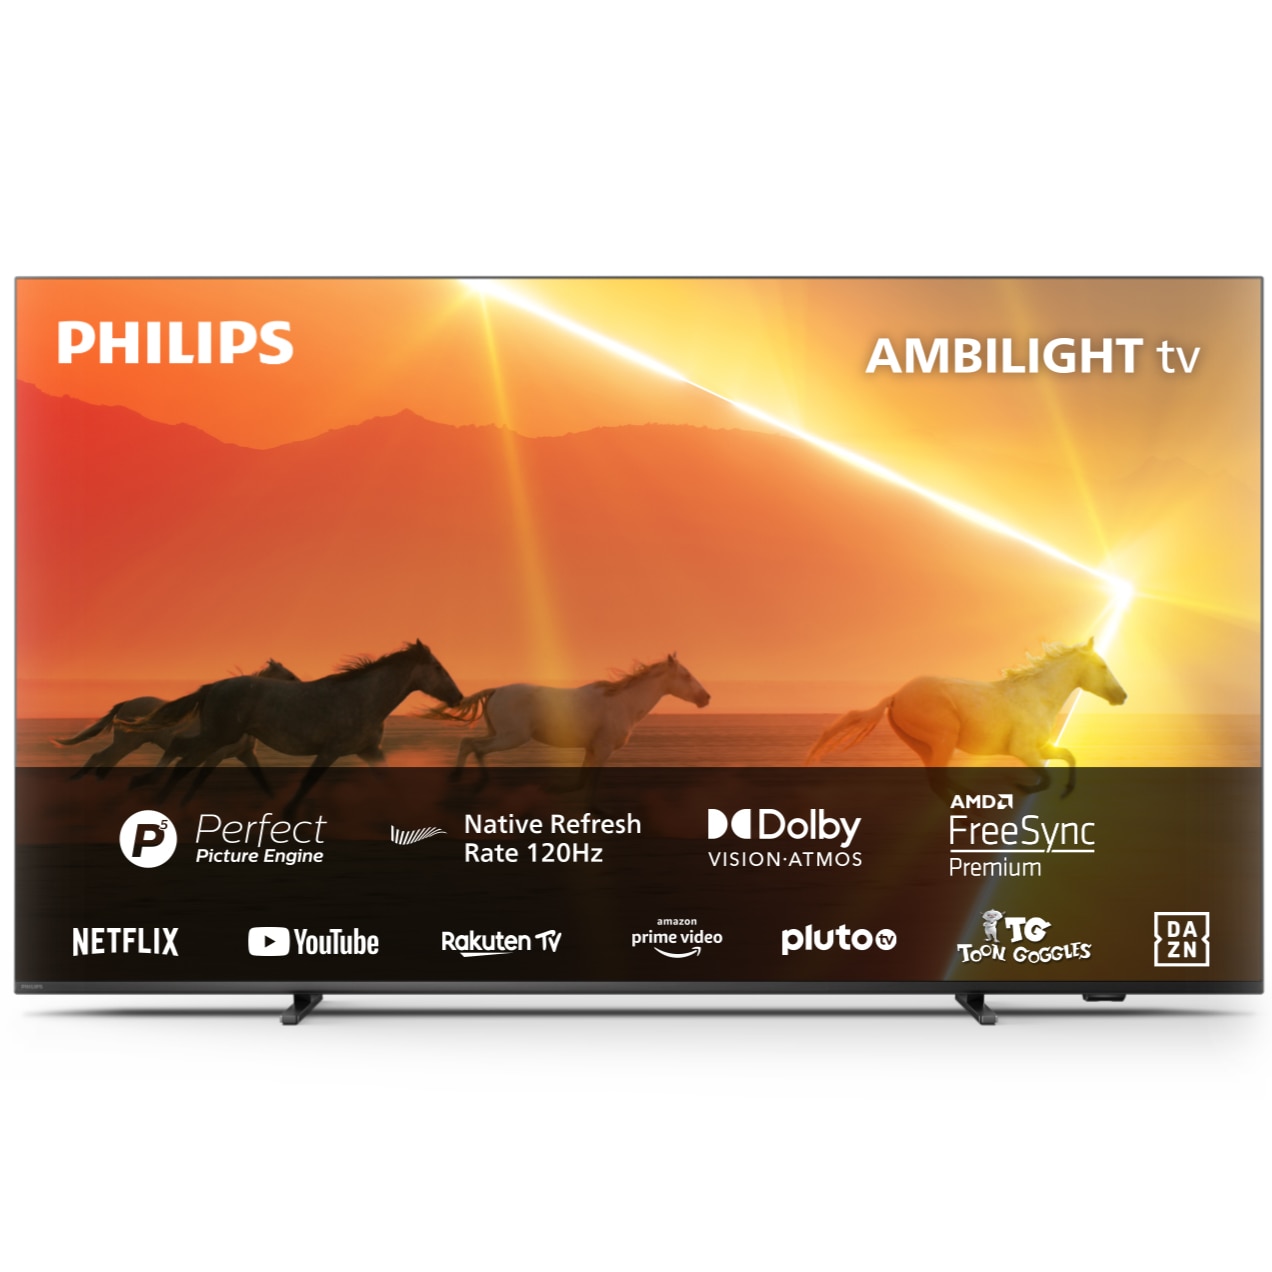 TV OLED 65 (165,1 cm) Philips 65OLED718/12, 4K UHD, Smart TV